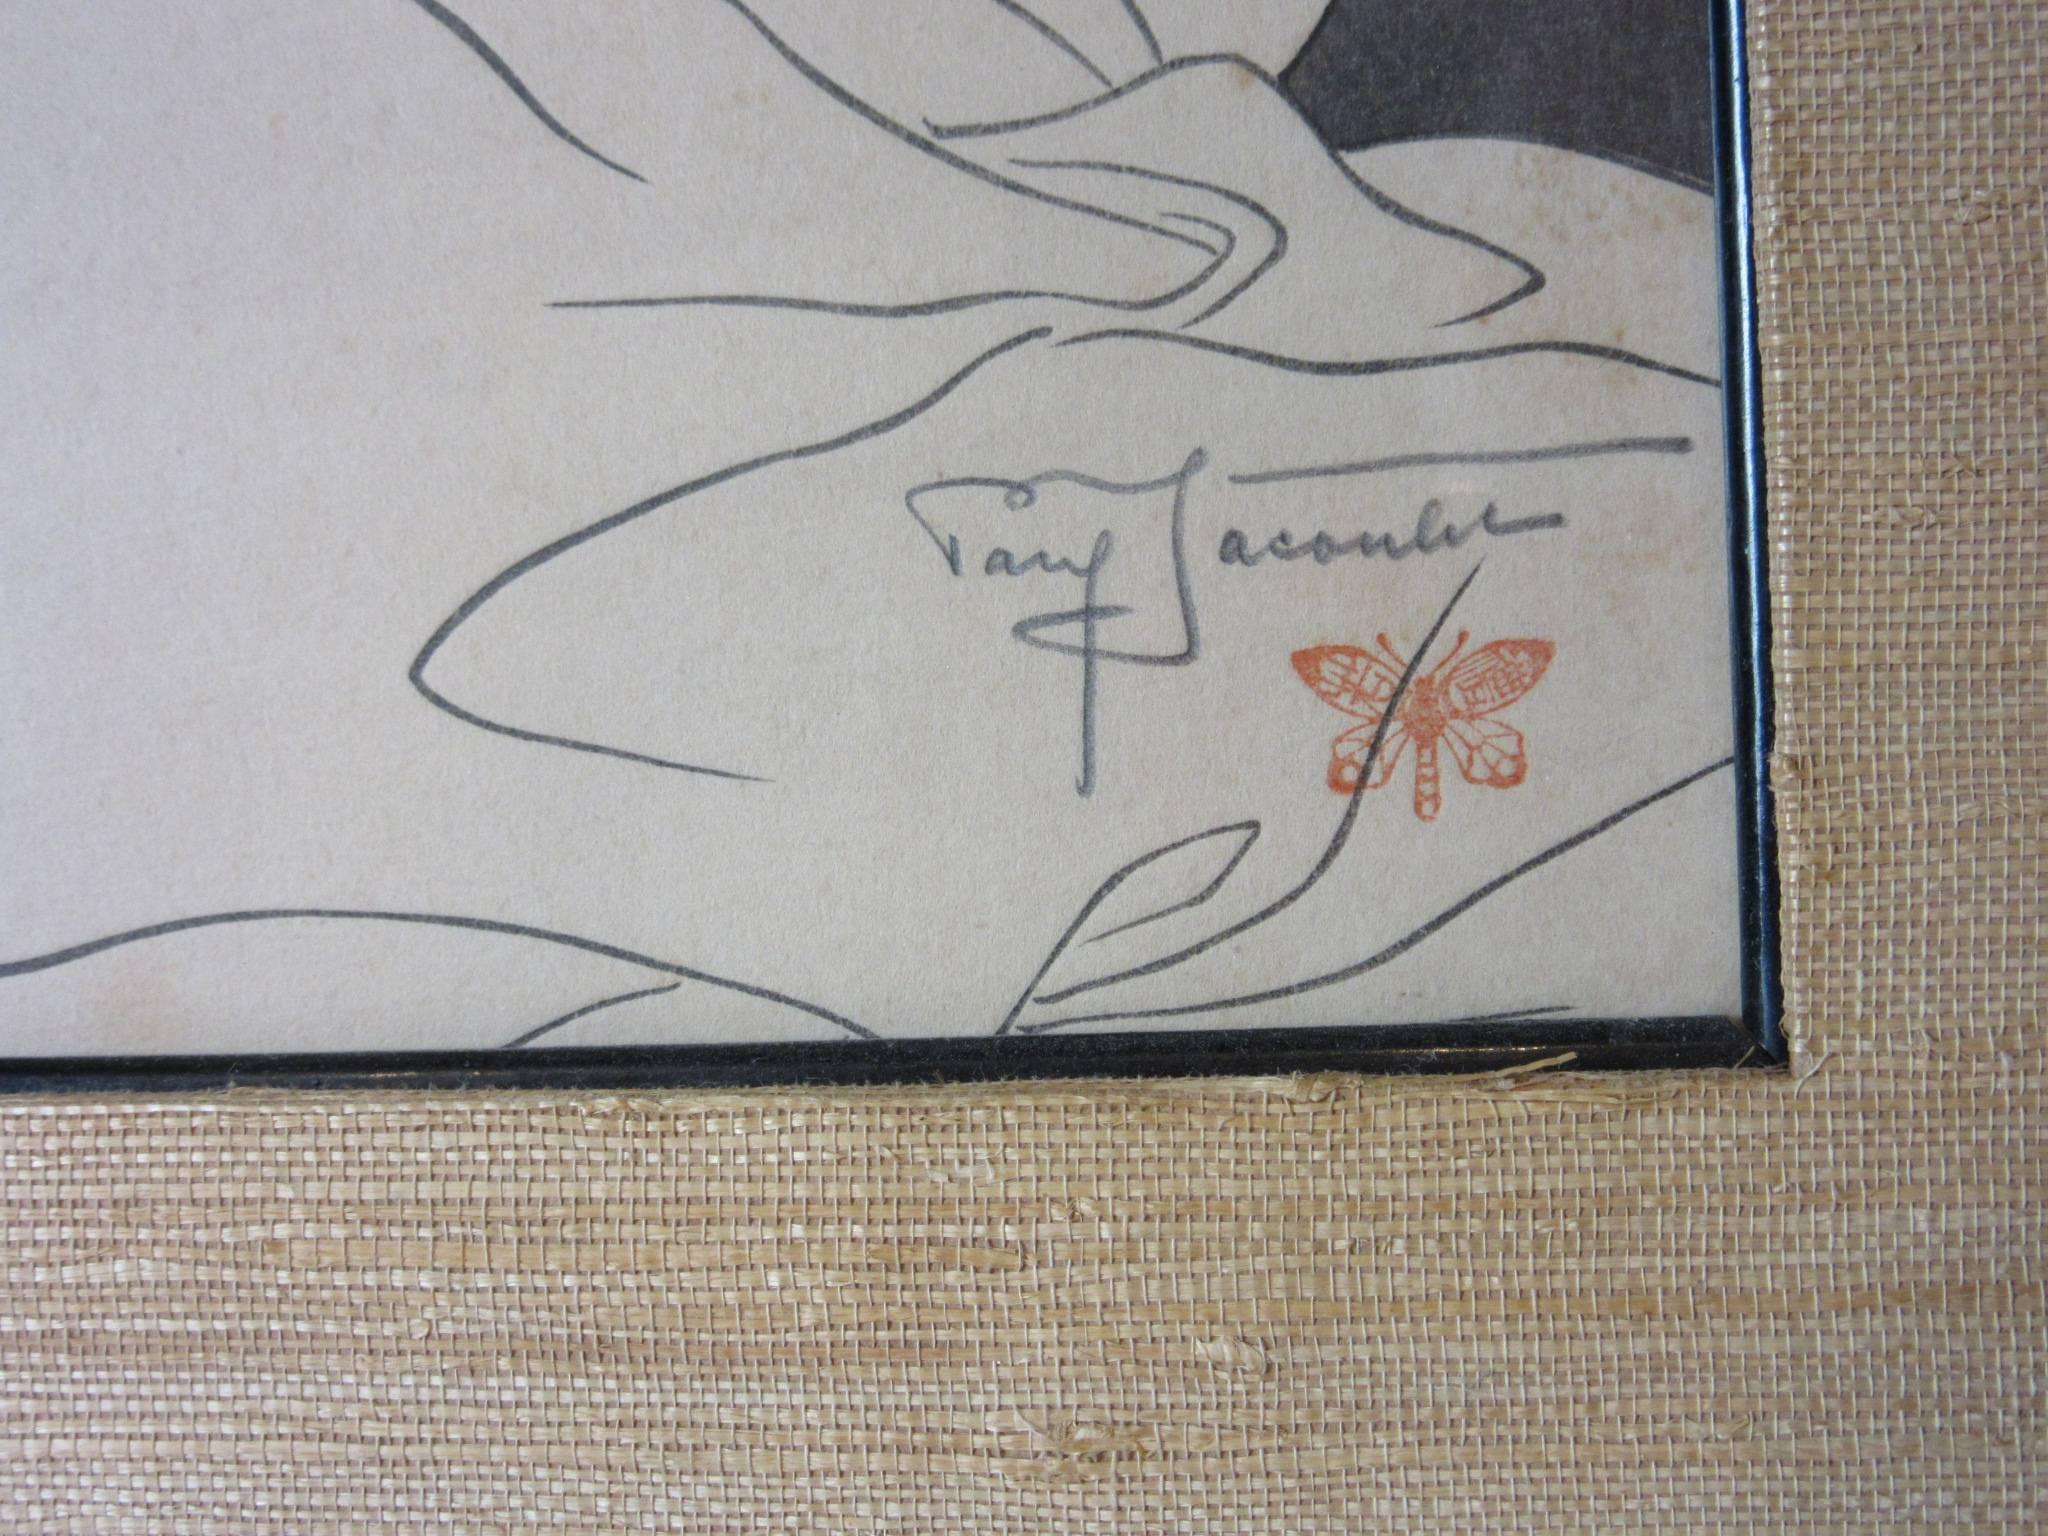 20th Century Paul Jocoulet Signed Japanese Wood Block Print 